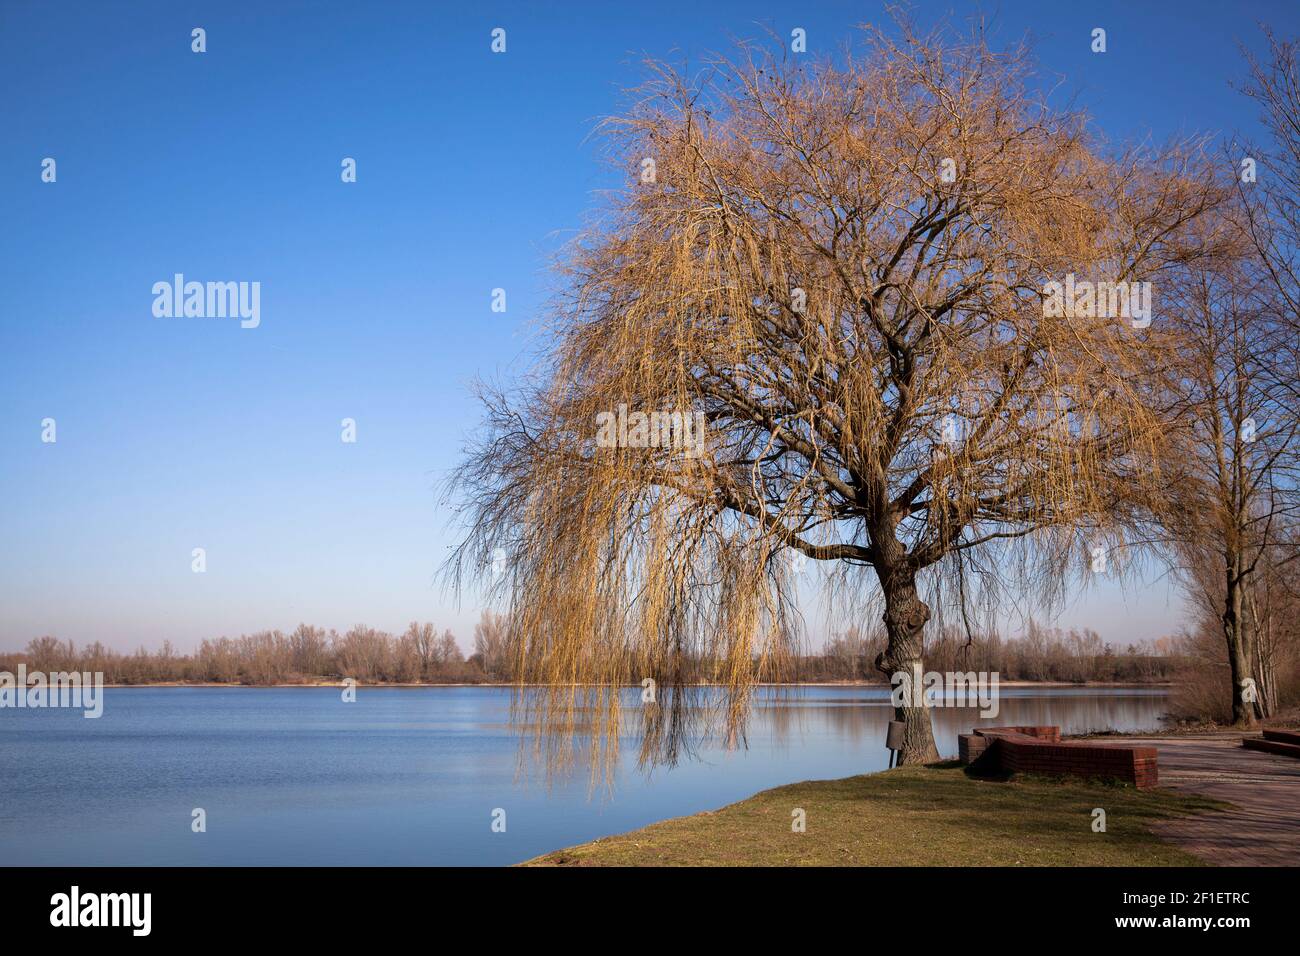 weeping willow in Wardt on the lake Xantener Nordsee, Xanten, North Rhine-Westphalia, Germany.  Trauerweide am Hafen Wardt an der Xantener Nordsee, Xa Stock Photo